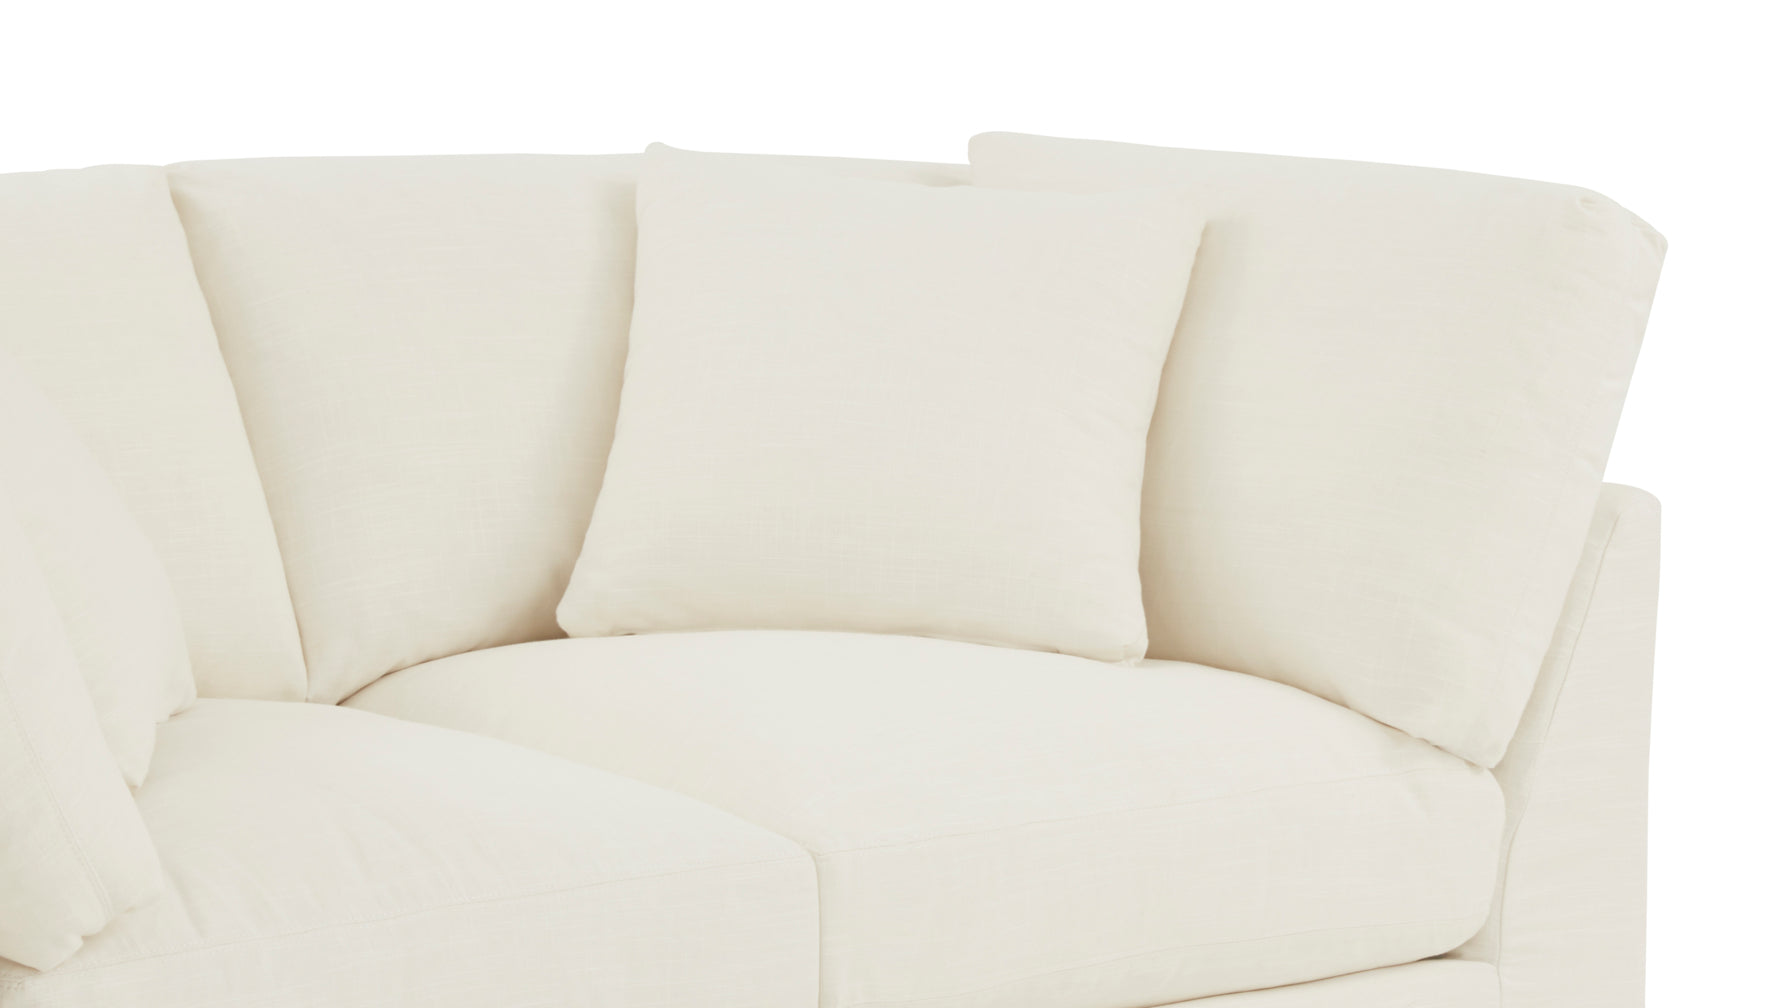 Get Together™ 2-Piece Modular Sofa, Standard, Cream Linen - Image 10